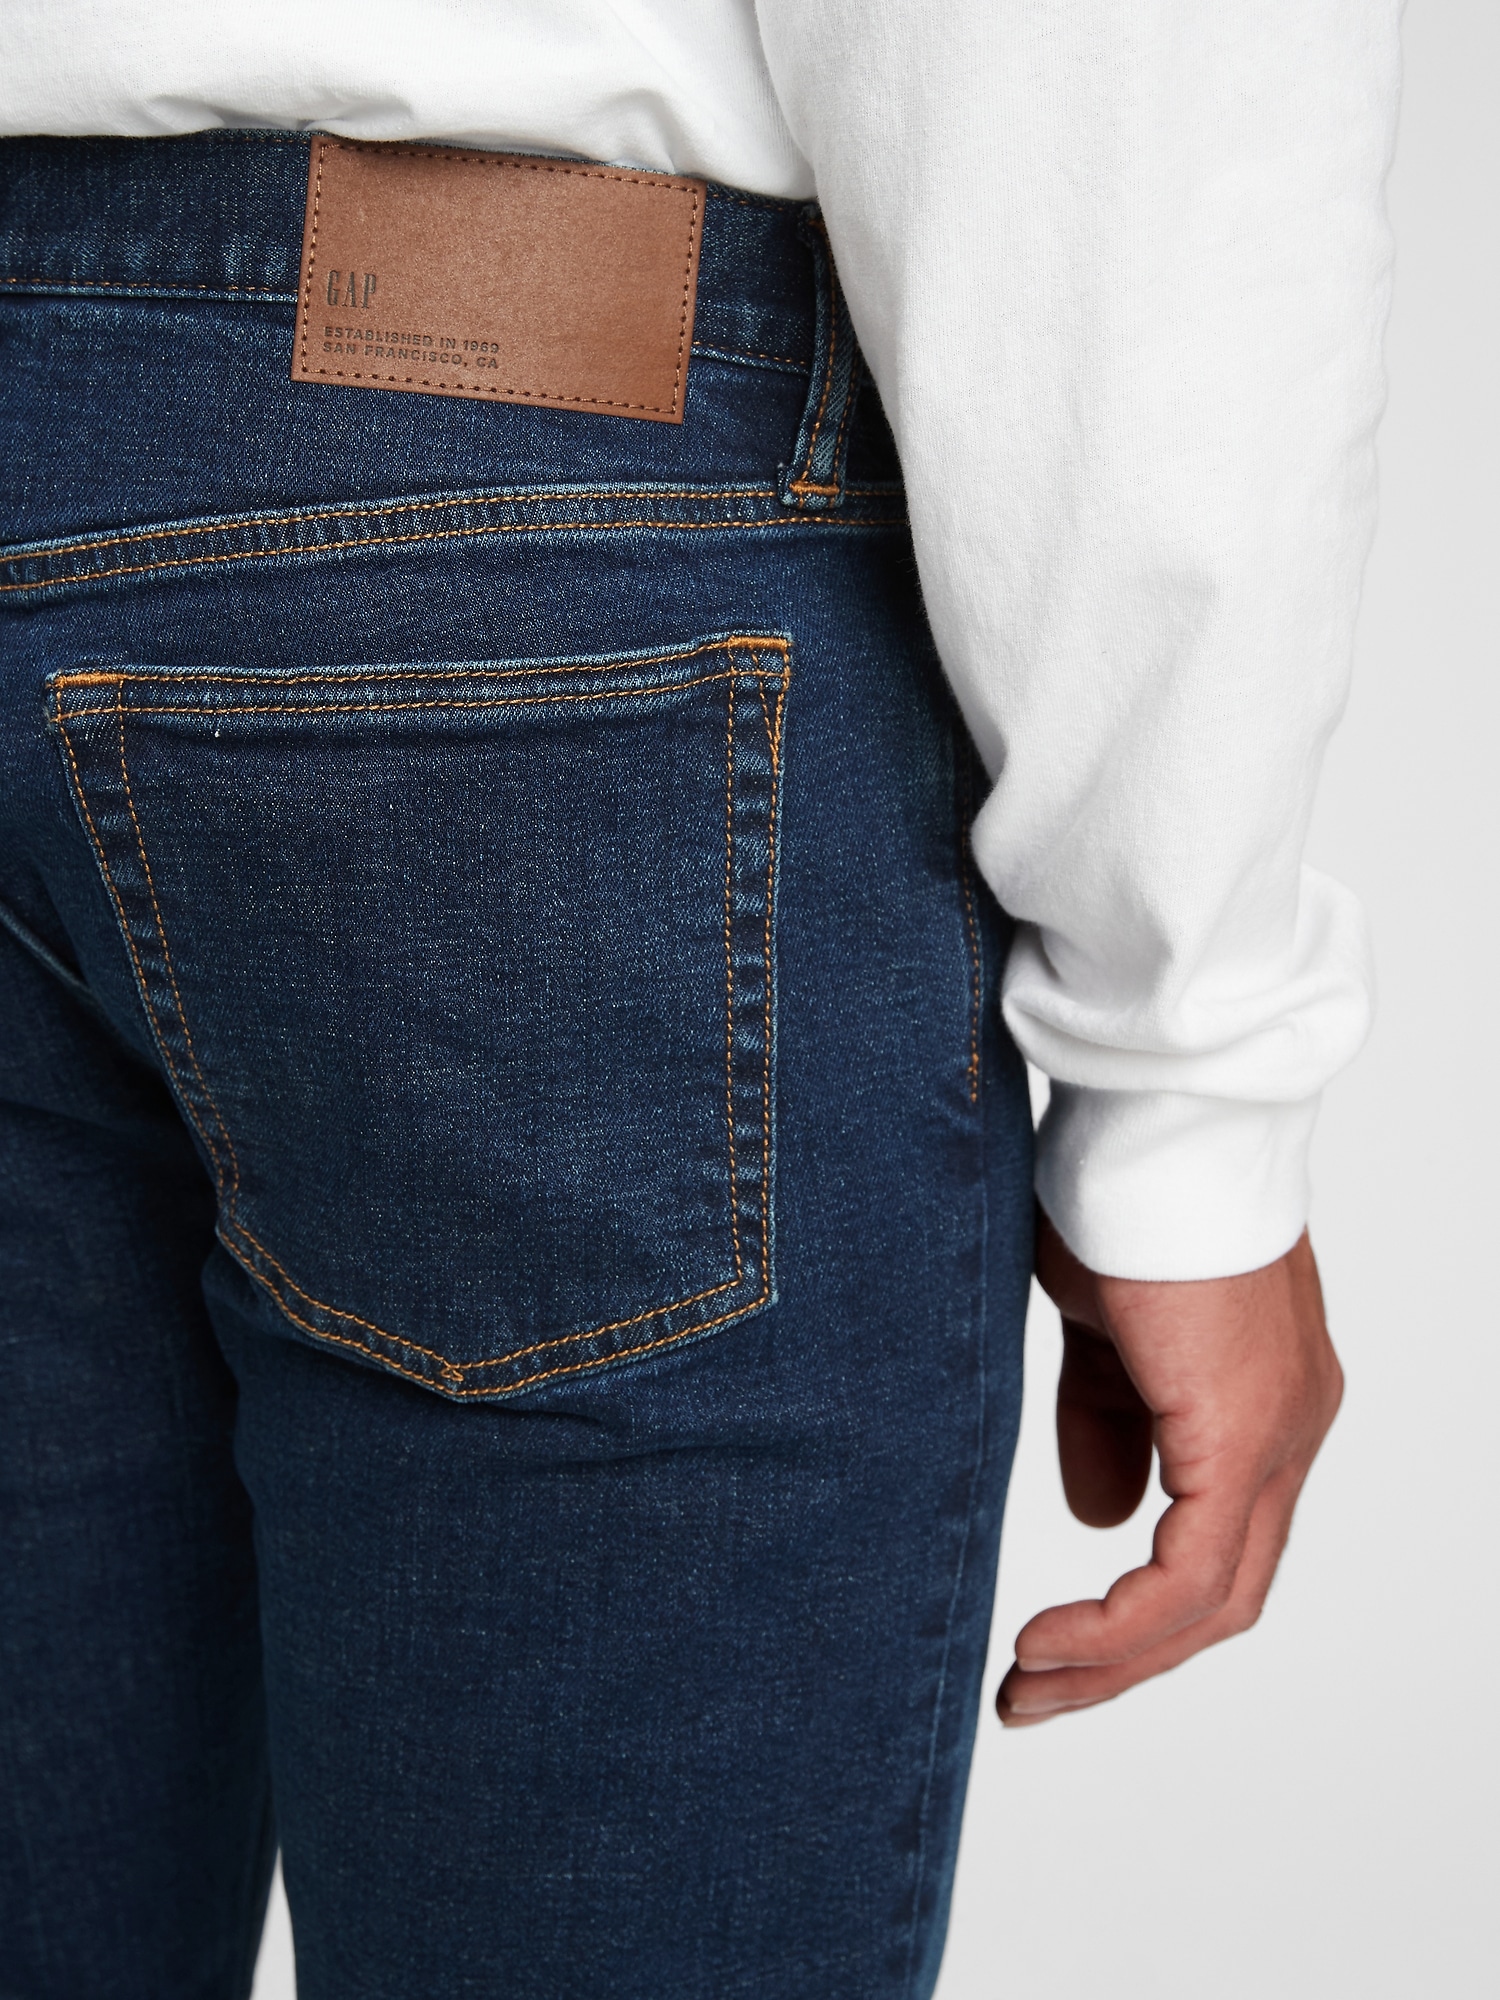 GAP Men's Soft Wear Stretch Slim Fit Denim Jeans, Midnight Wash, 30W x 32L  : : Fashion